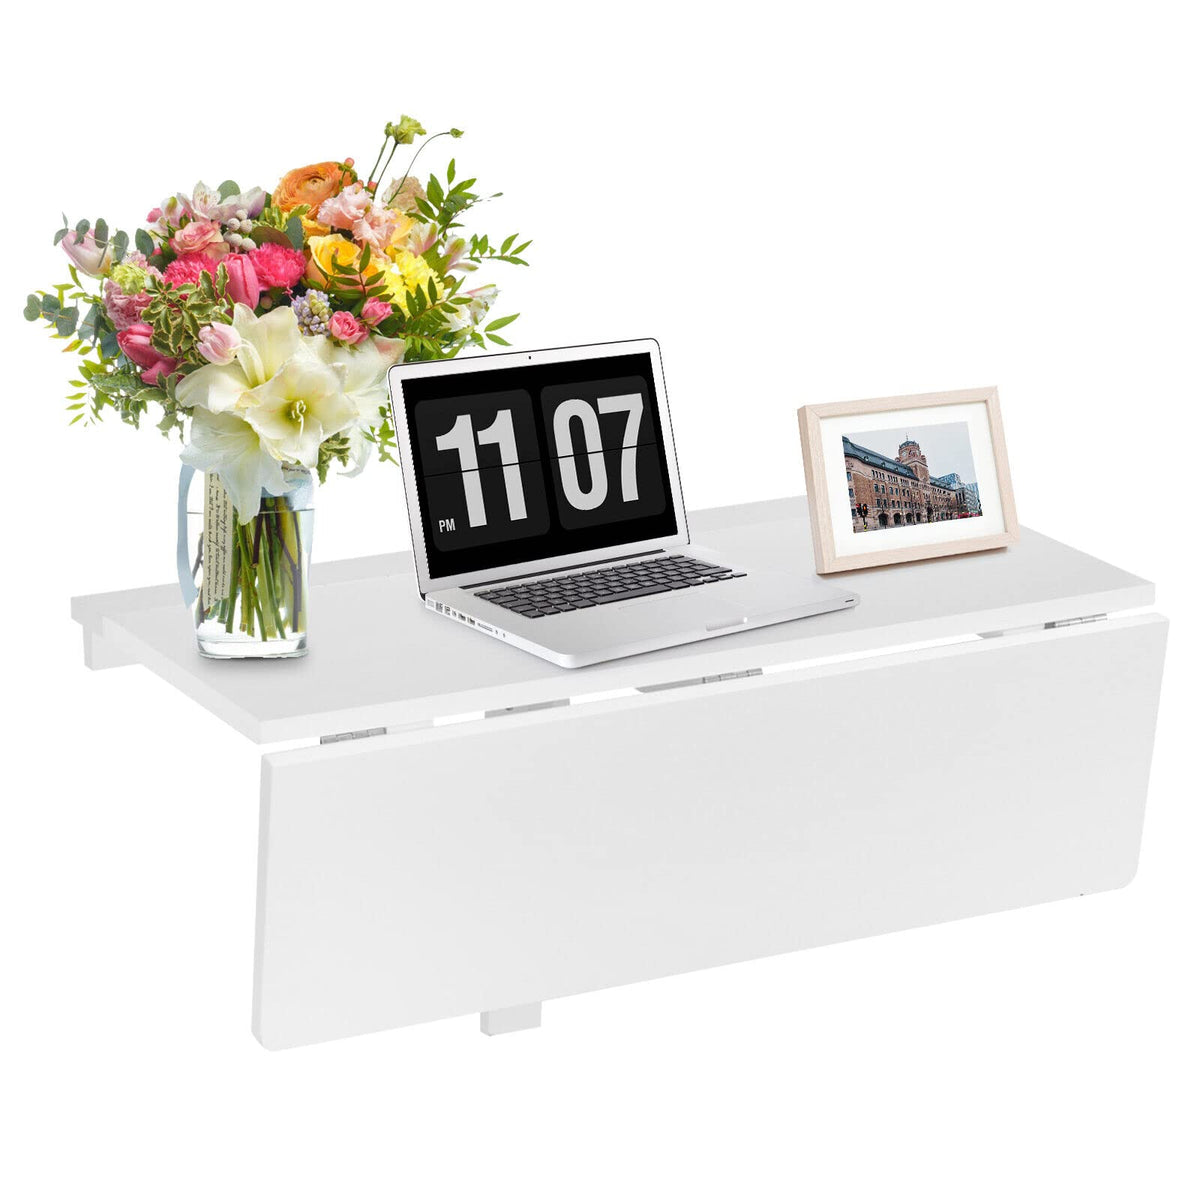 Giantex Wall Mounted Folding Table, 80cm x 60.5cm Drop-Leaf Floating Writing Desk